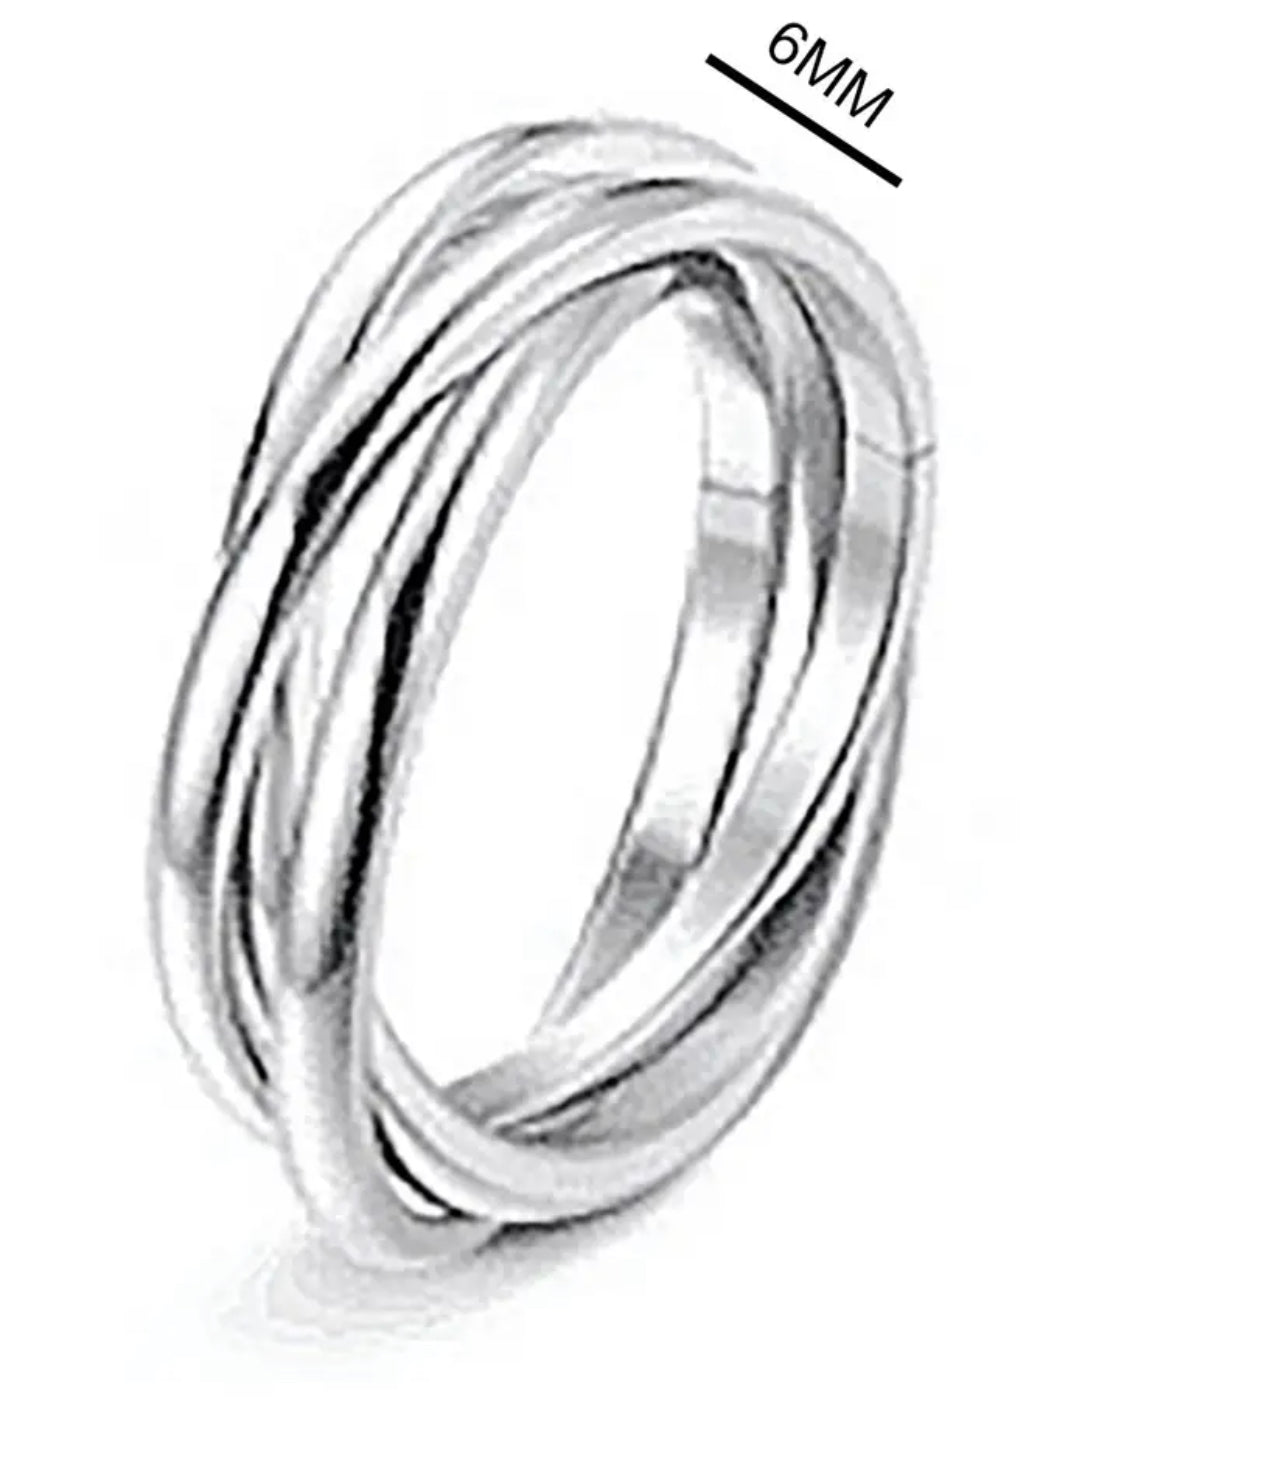 Interlinked Spinner Fidget Band Ring in Stainless Steel